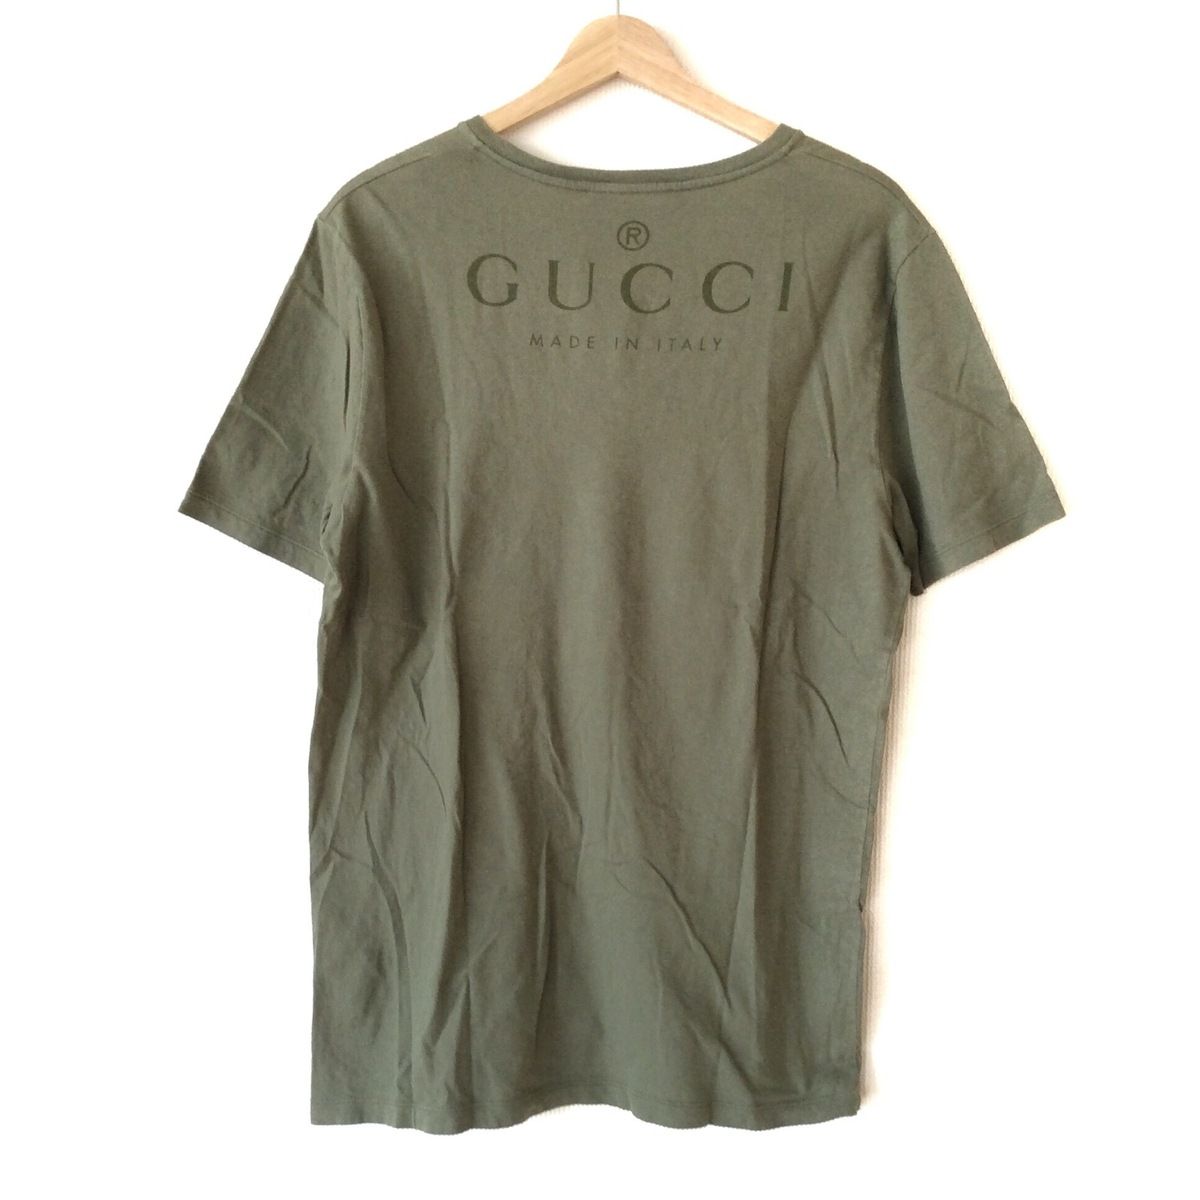 GUCCI(グッチ) 半袖Tシャツ サイズL メンズ - カーキ Vネック - メルカリ